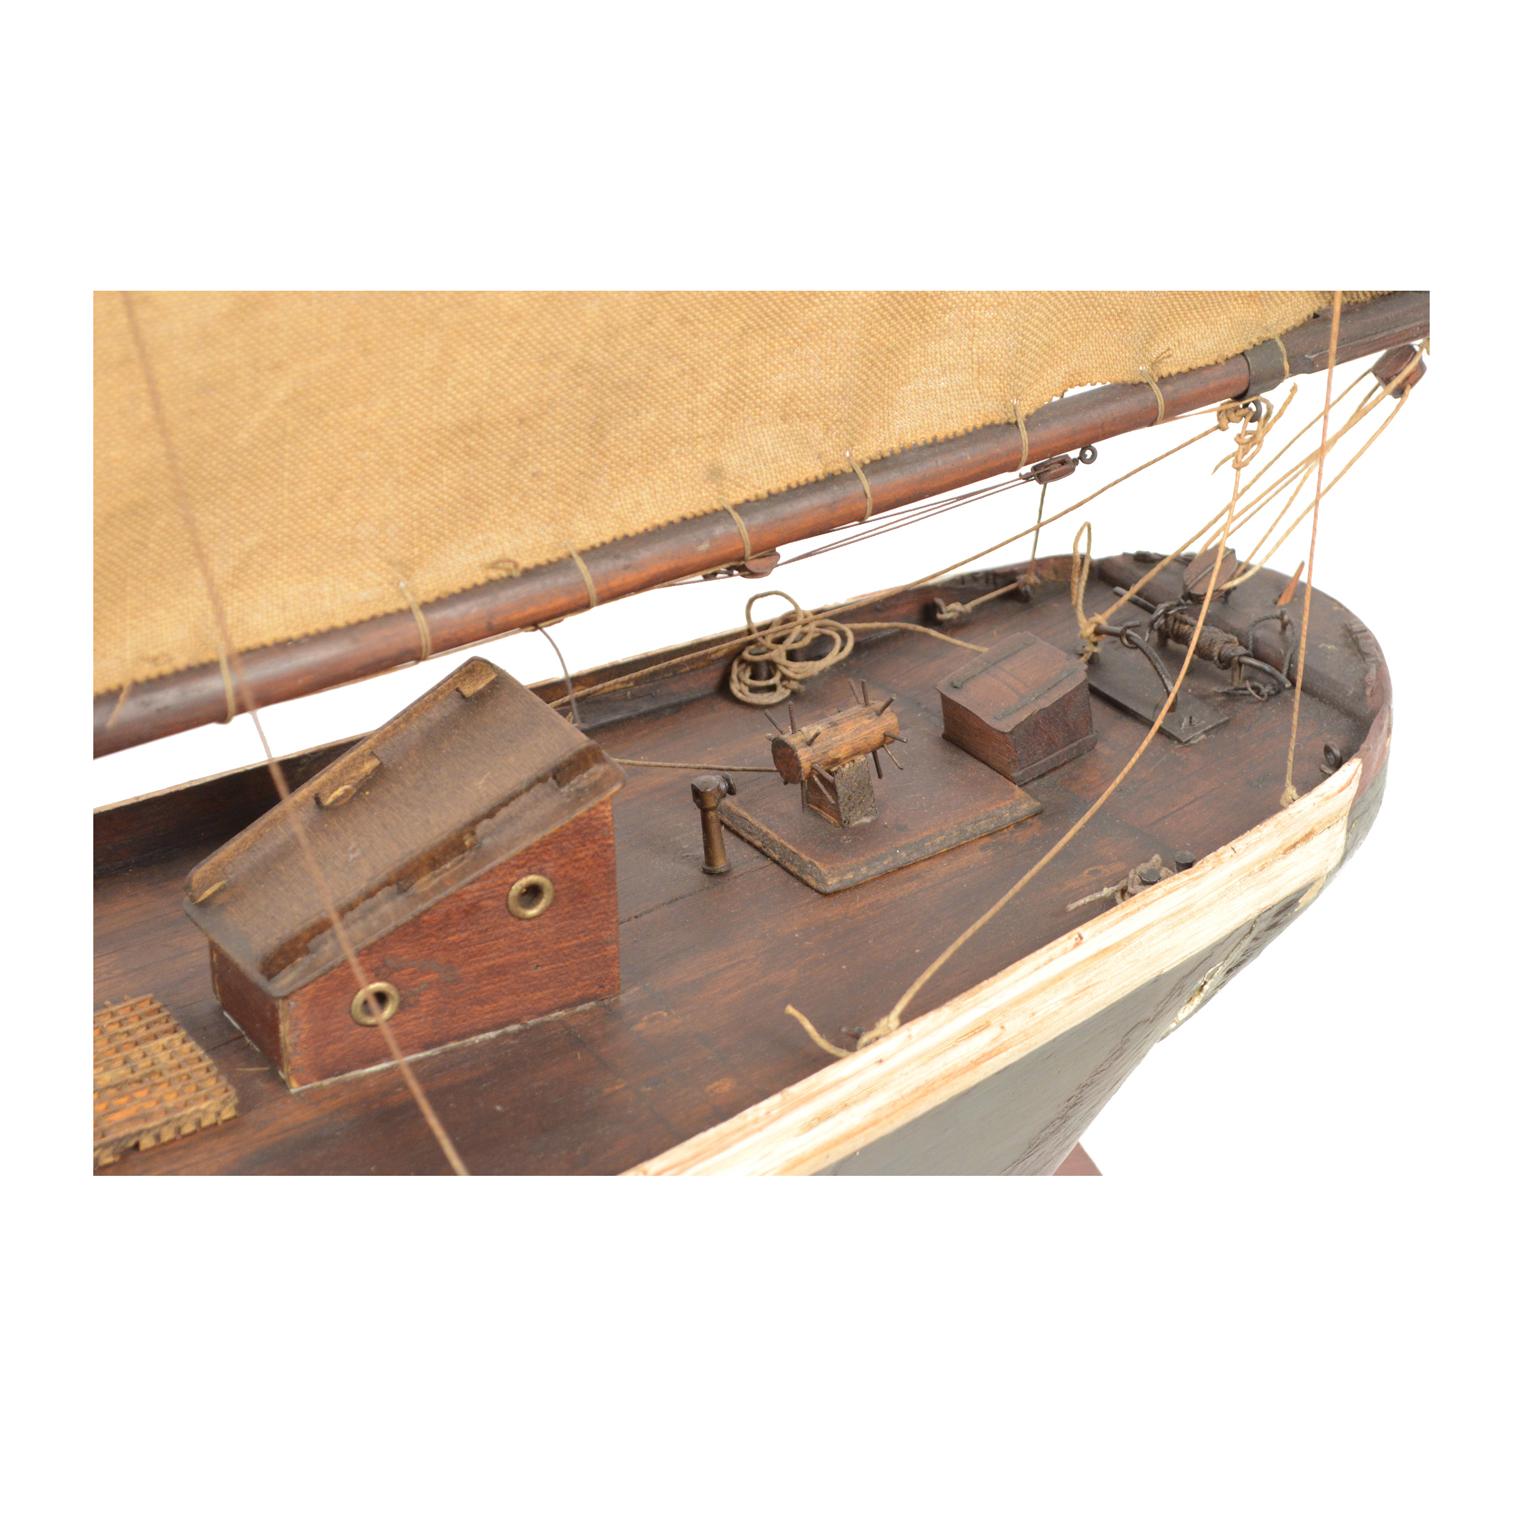 Vintage Wooden Sailing Model of a Schooner, Early 1900s 15